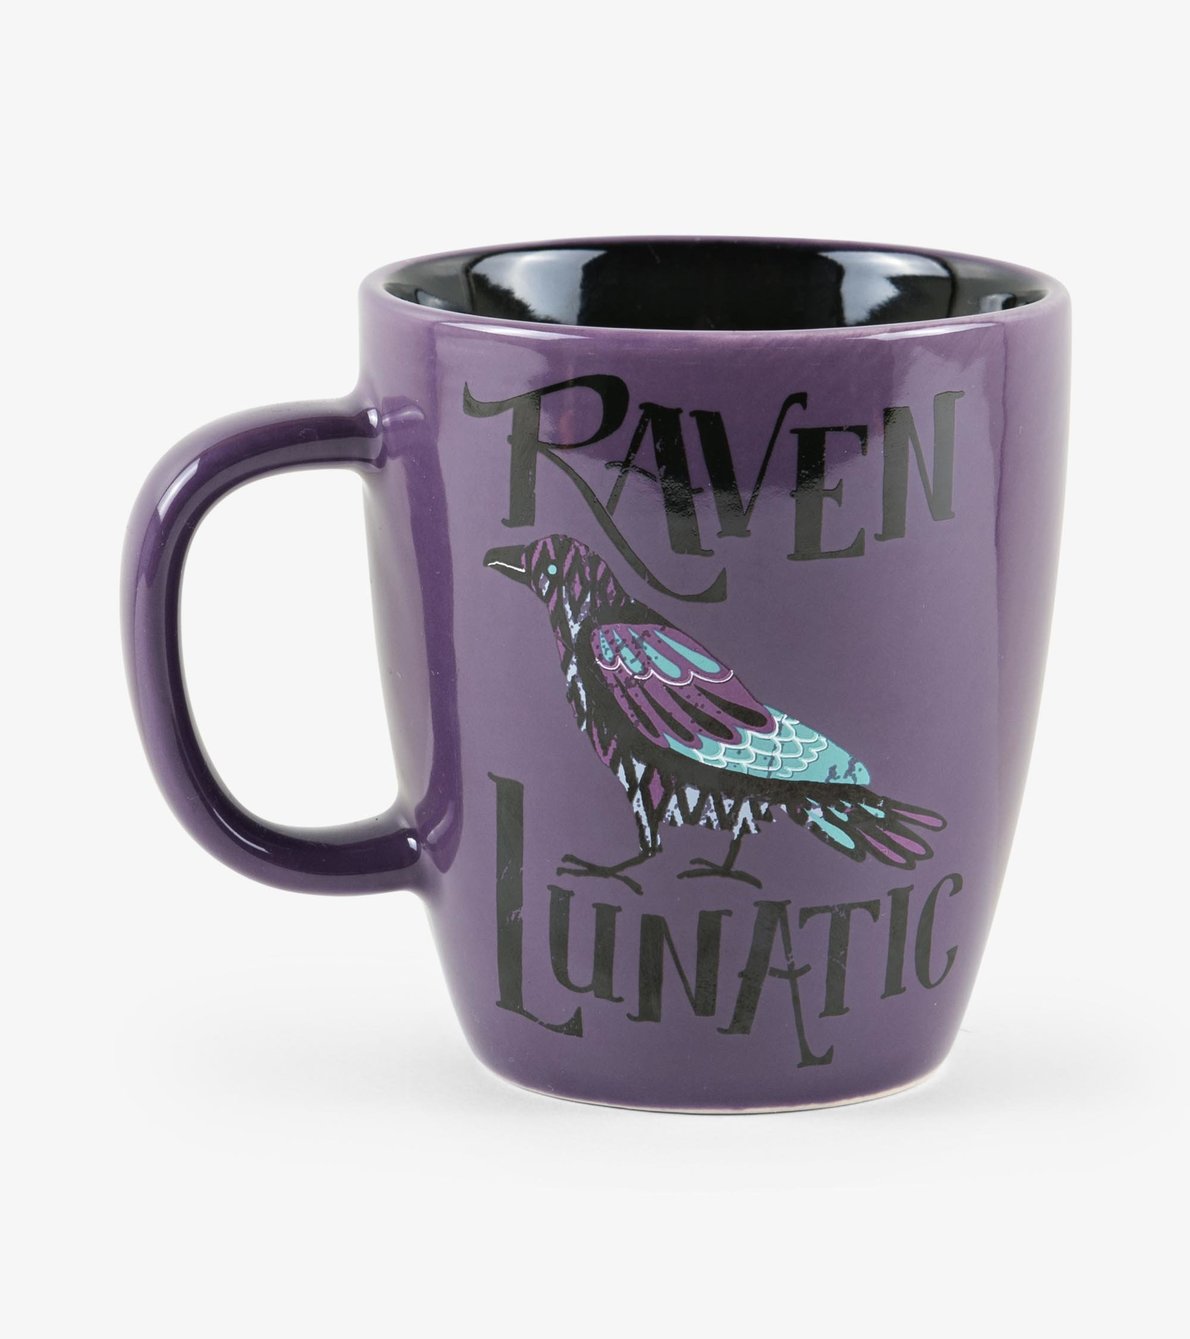 View larger image of Raven Lunatic Curved Ceramic Mug